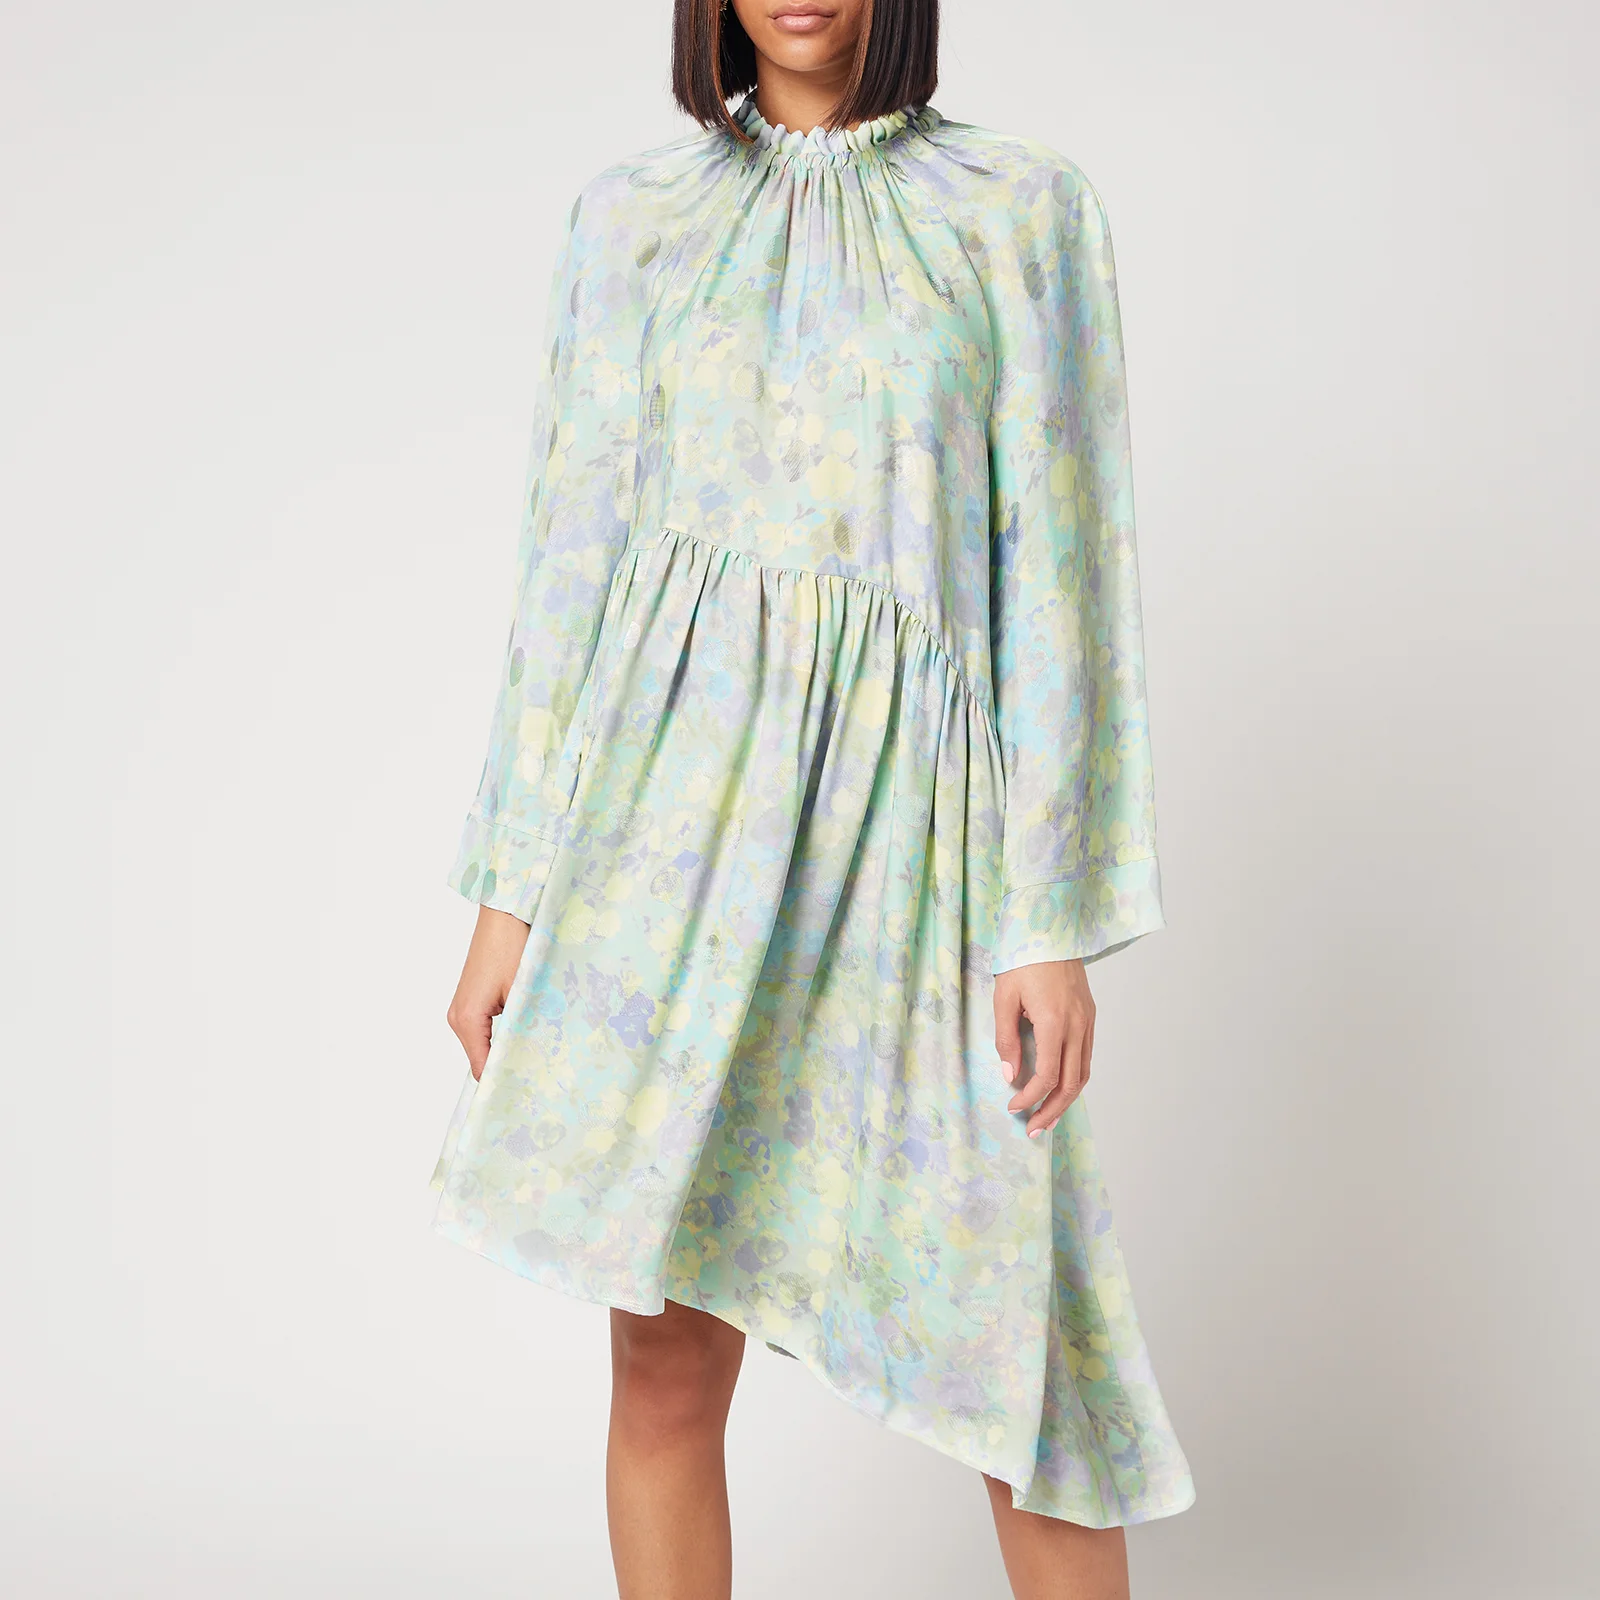 Stine Goya Women's Lamar Aysemtric Dress - Pastel Bloom Image 1